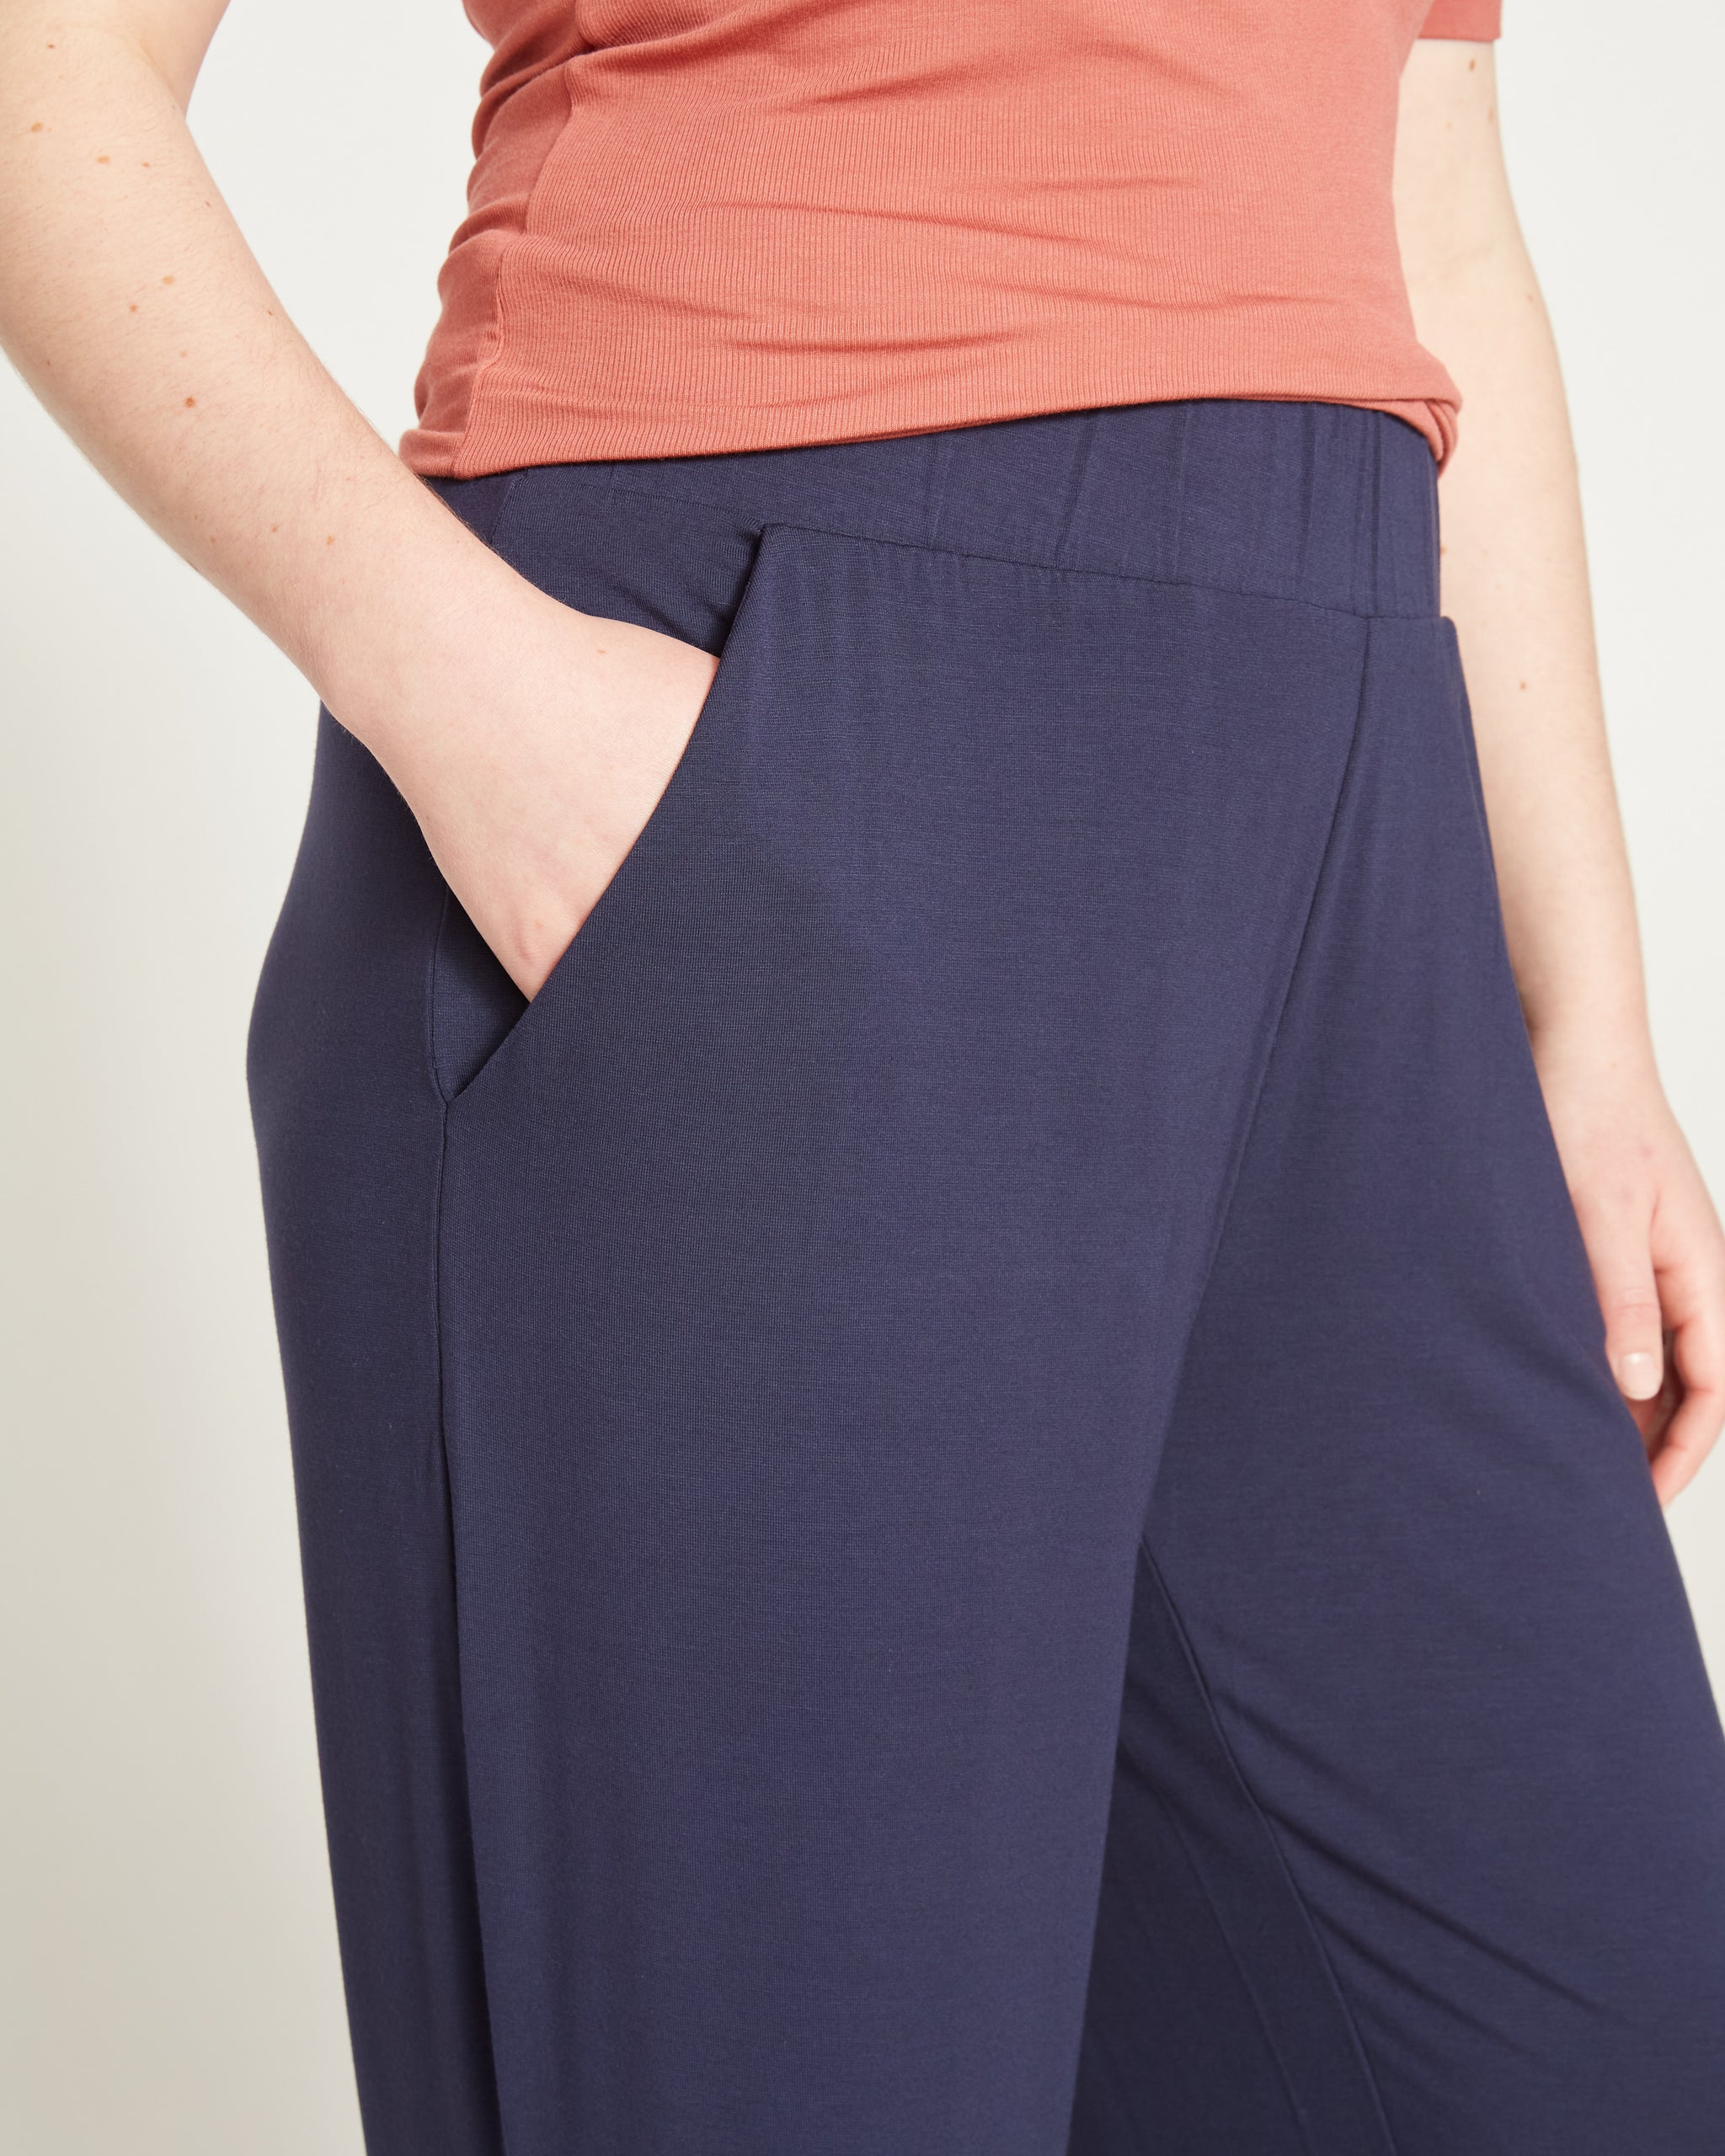 Wellmade Inc Women's Cuffed Dress Shorts